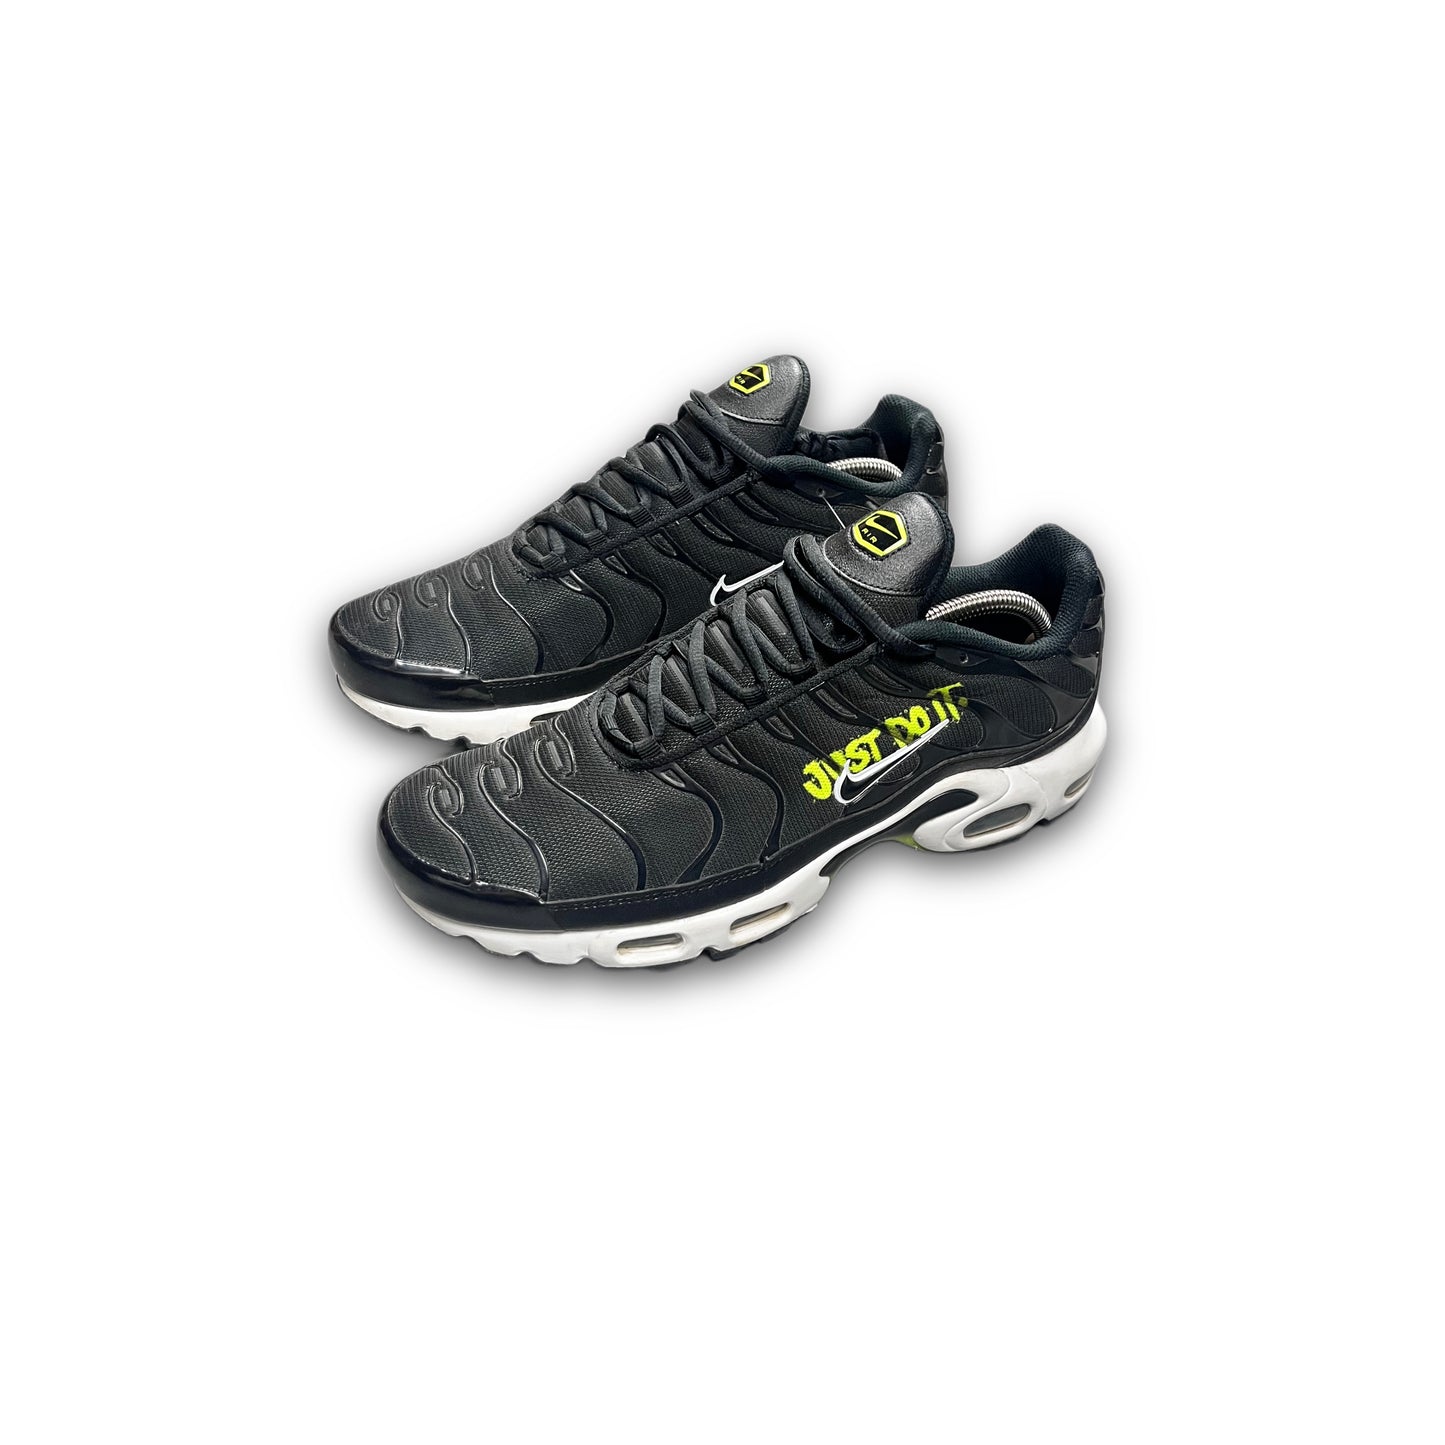 Nike Air Max Plus Tn "Black Volt" black neon